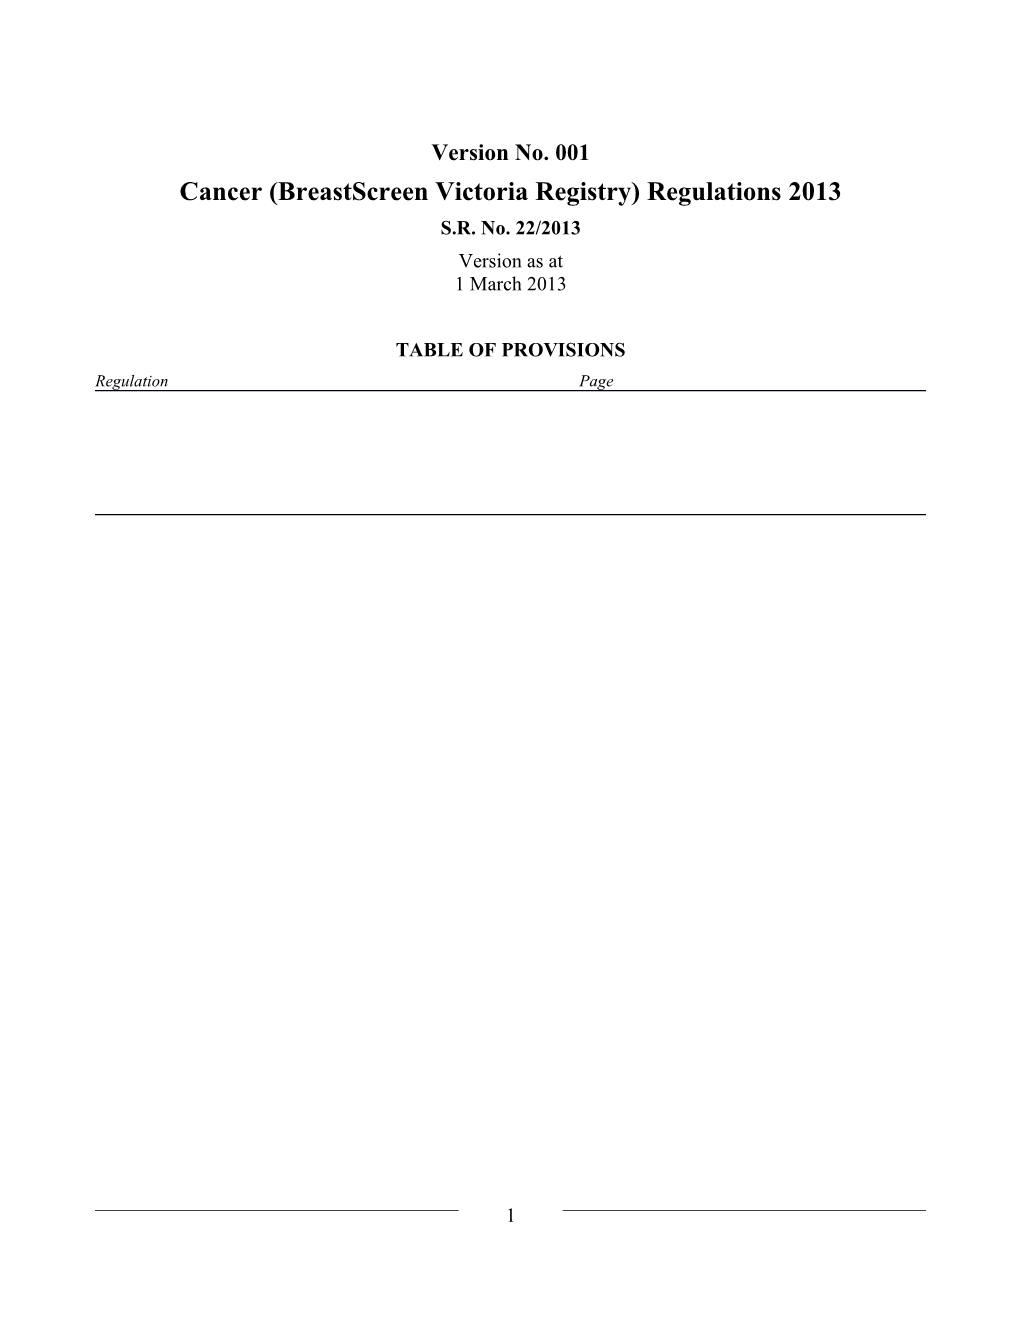 Cancer (Breastscreen Victoria Registry) Regulations 2013